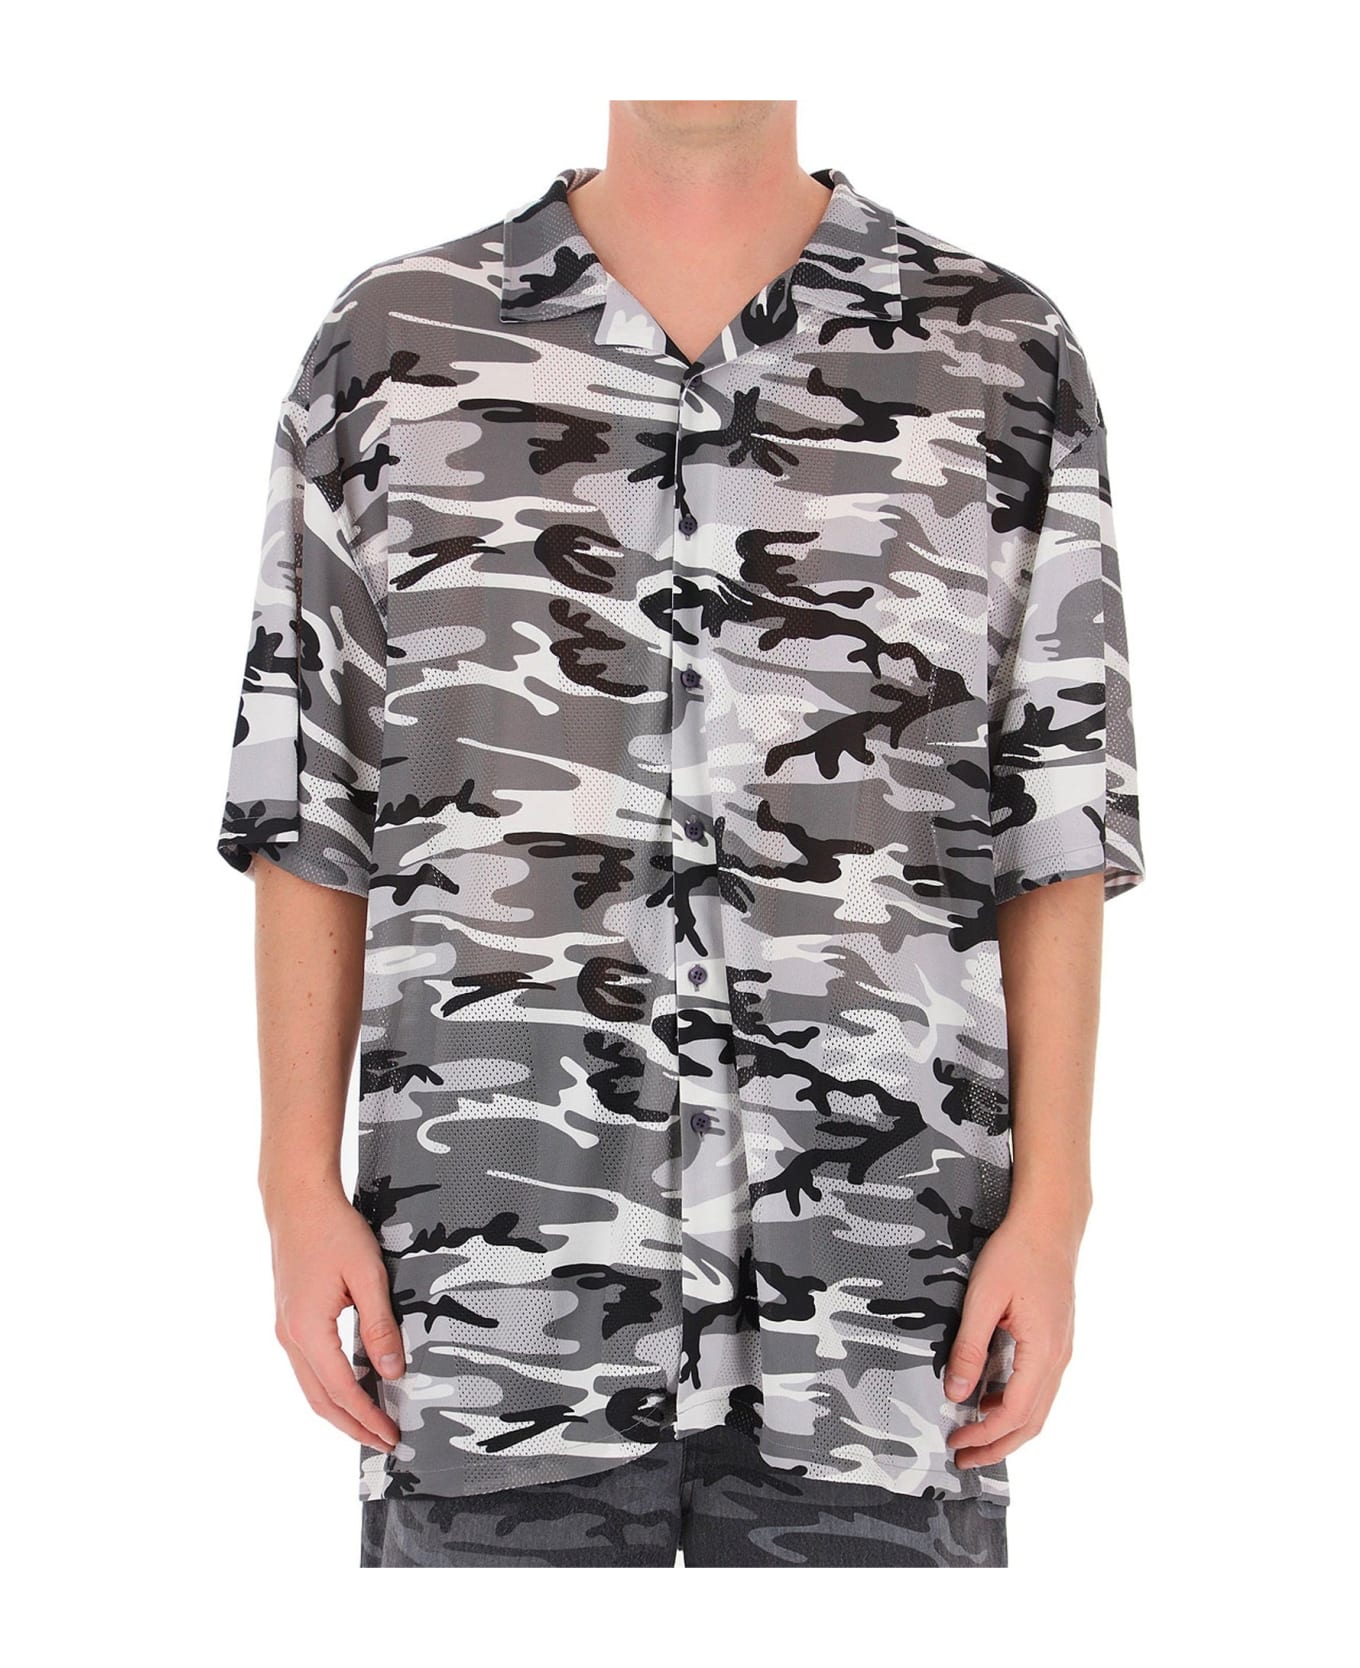 Balenciaga Camouflage Print Shirt - Gray